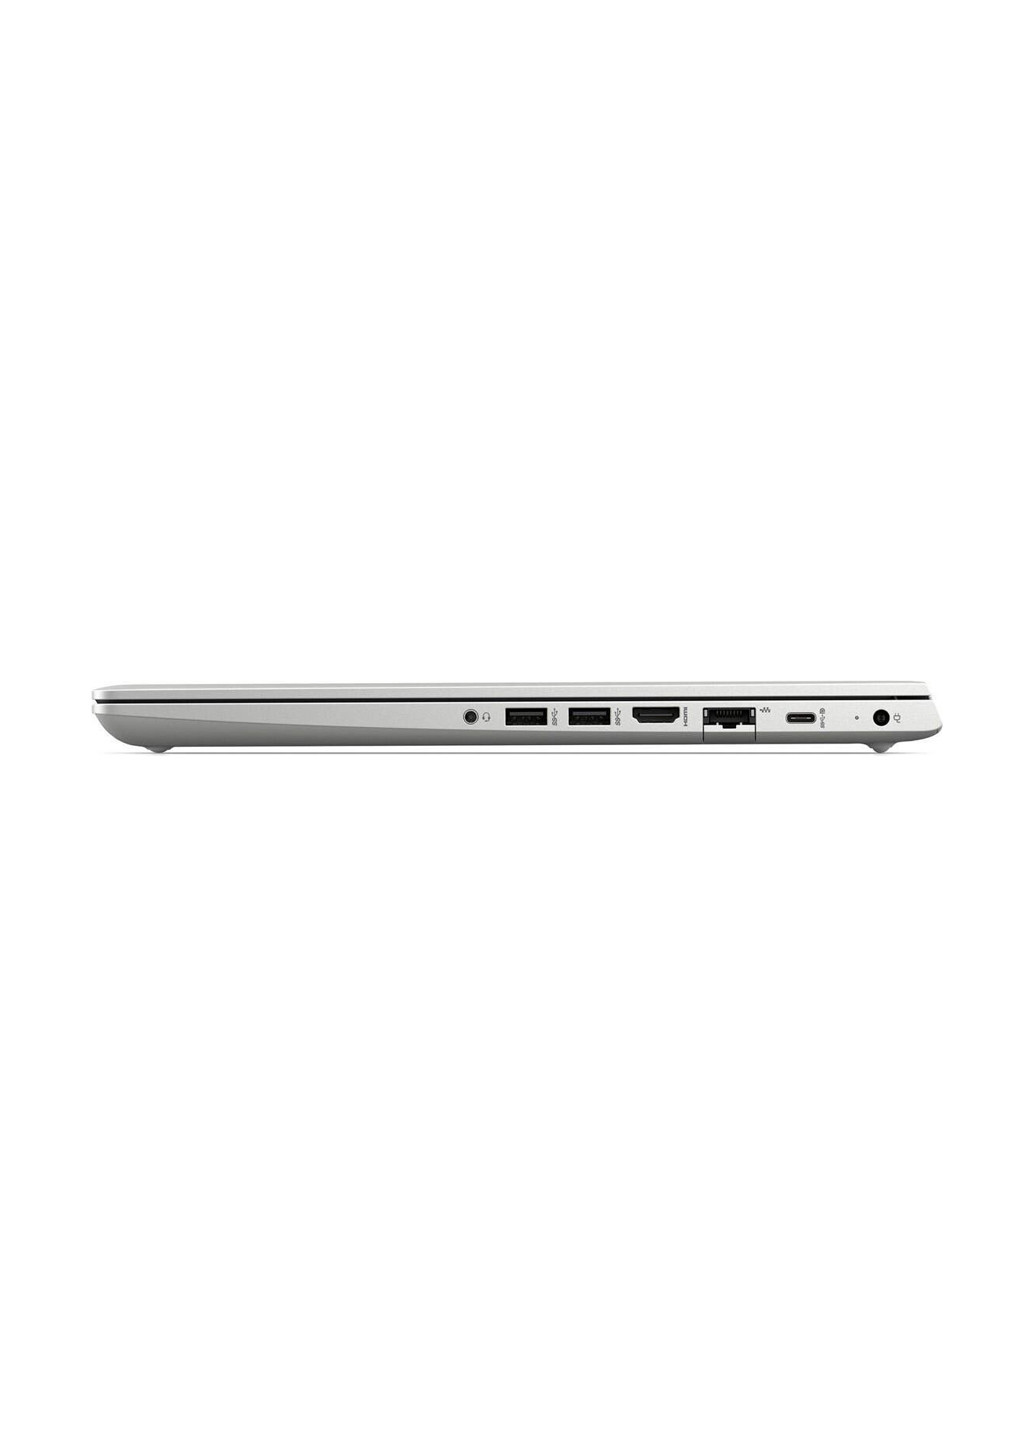 Ноутбук HP probook 450 g6 (4sz43av_v10) silver (158838142)